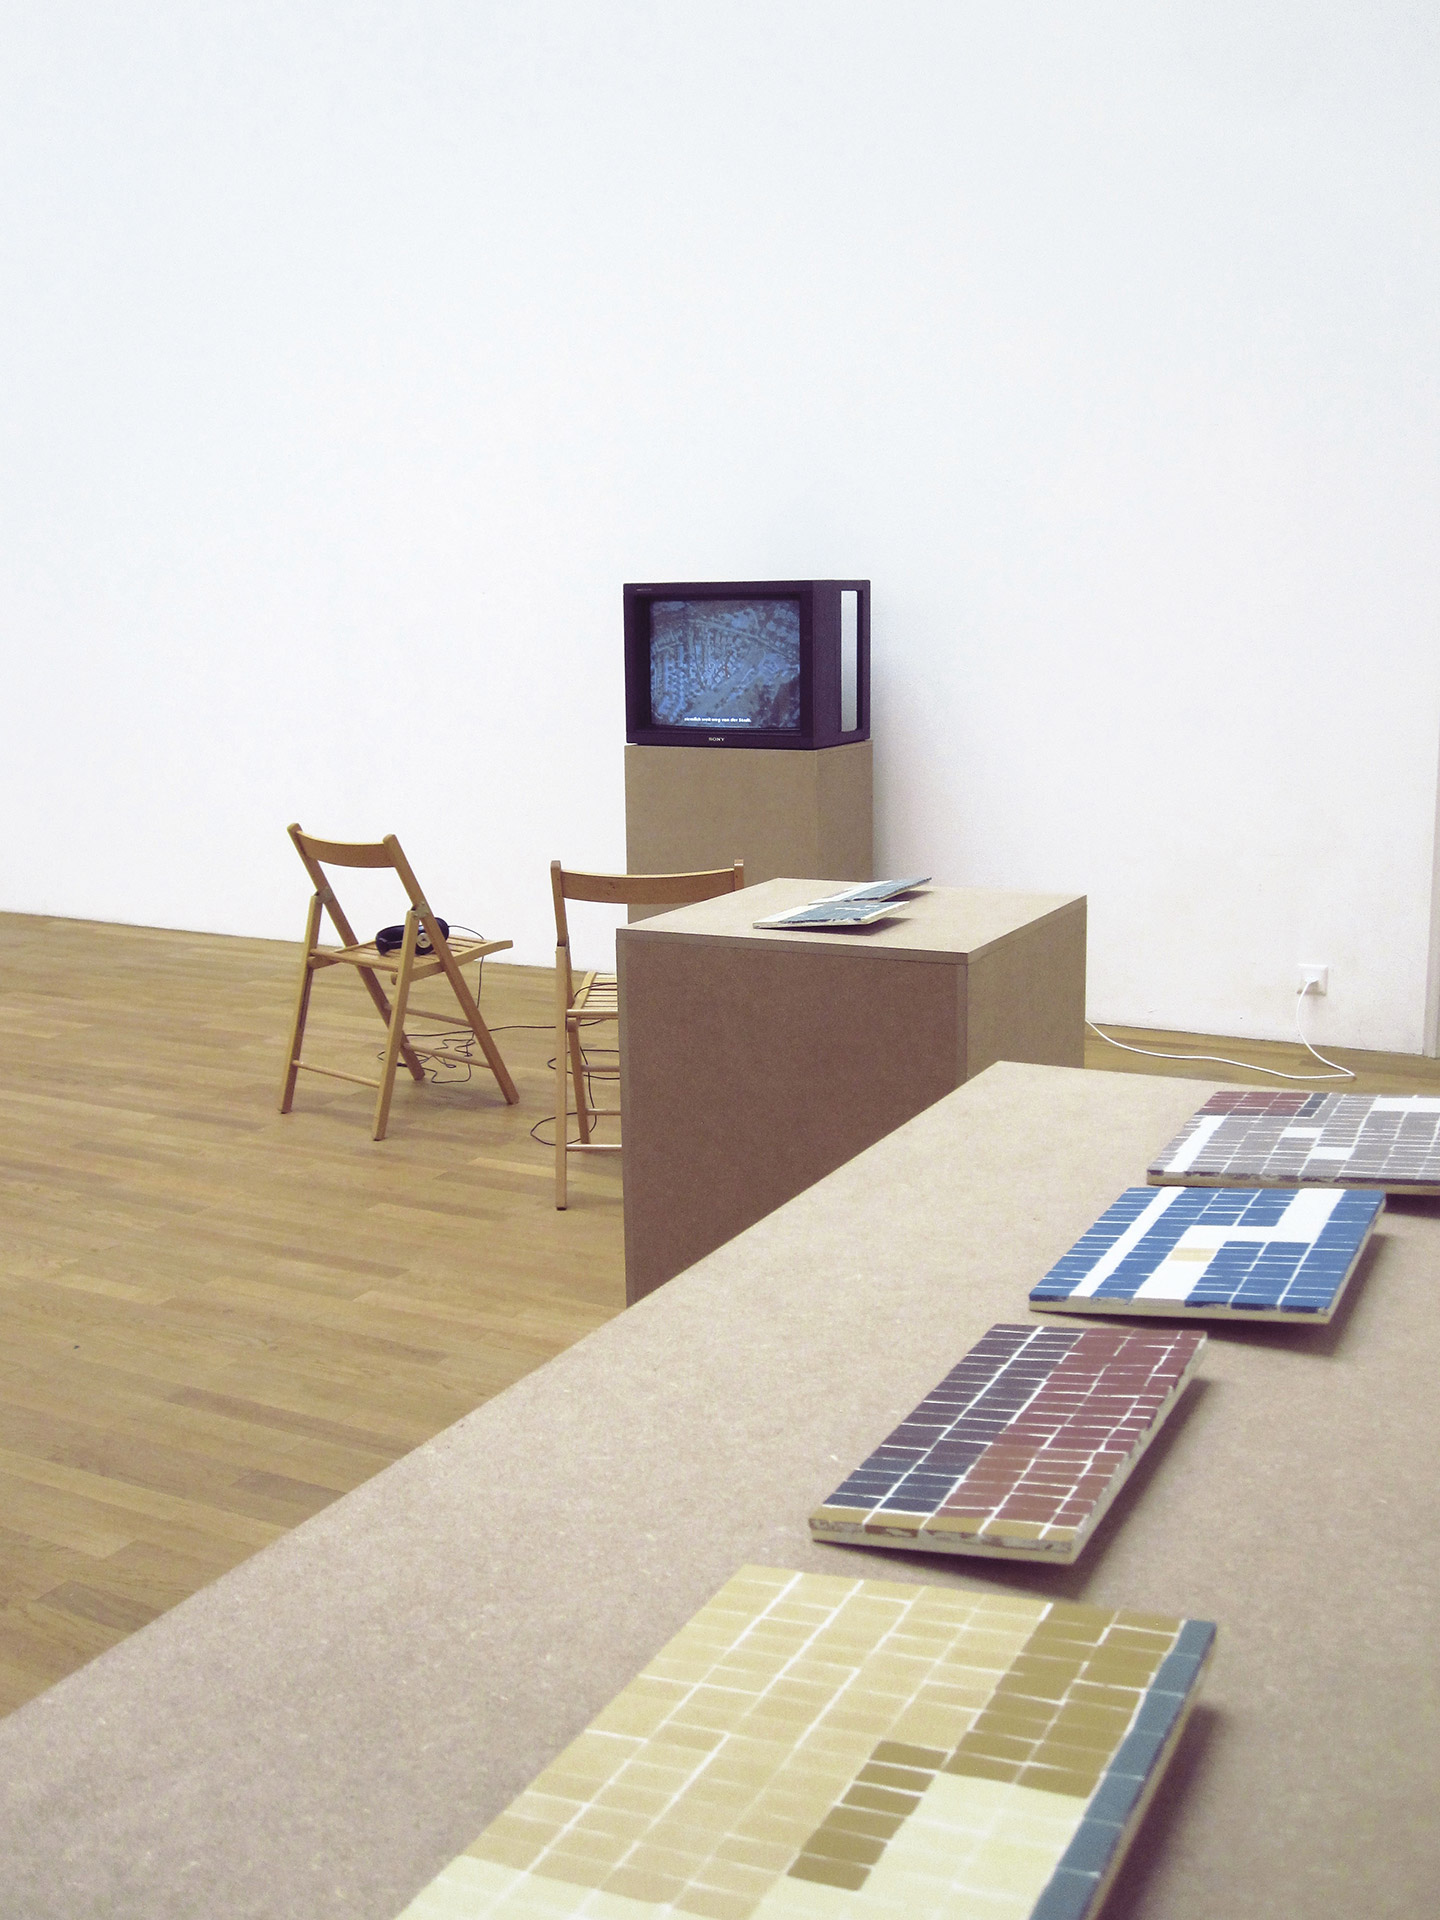 Patricia-Esquivias-Kunsthalle-Winterthur-2013-3.jpg